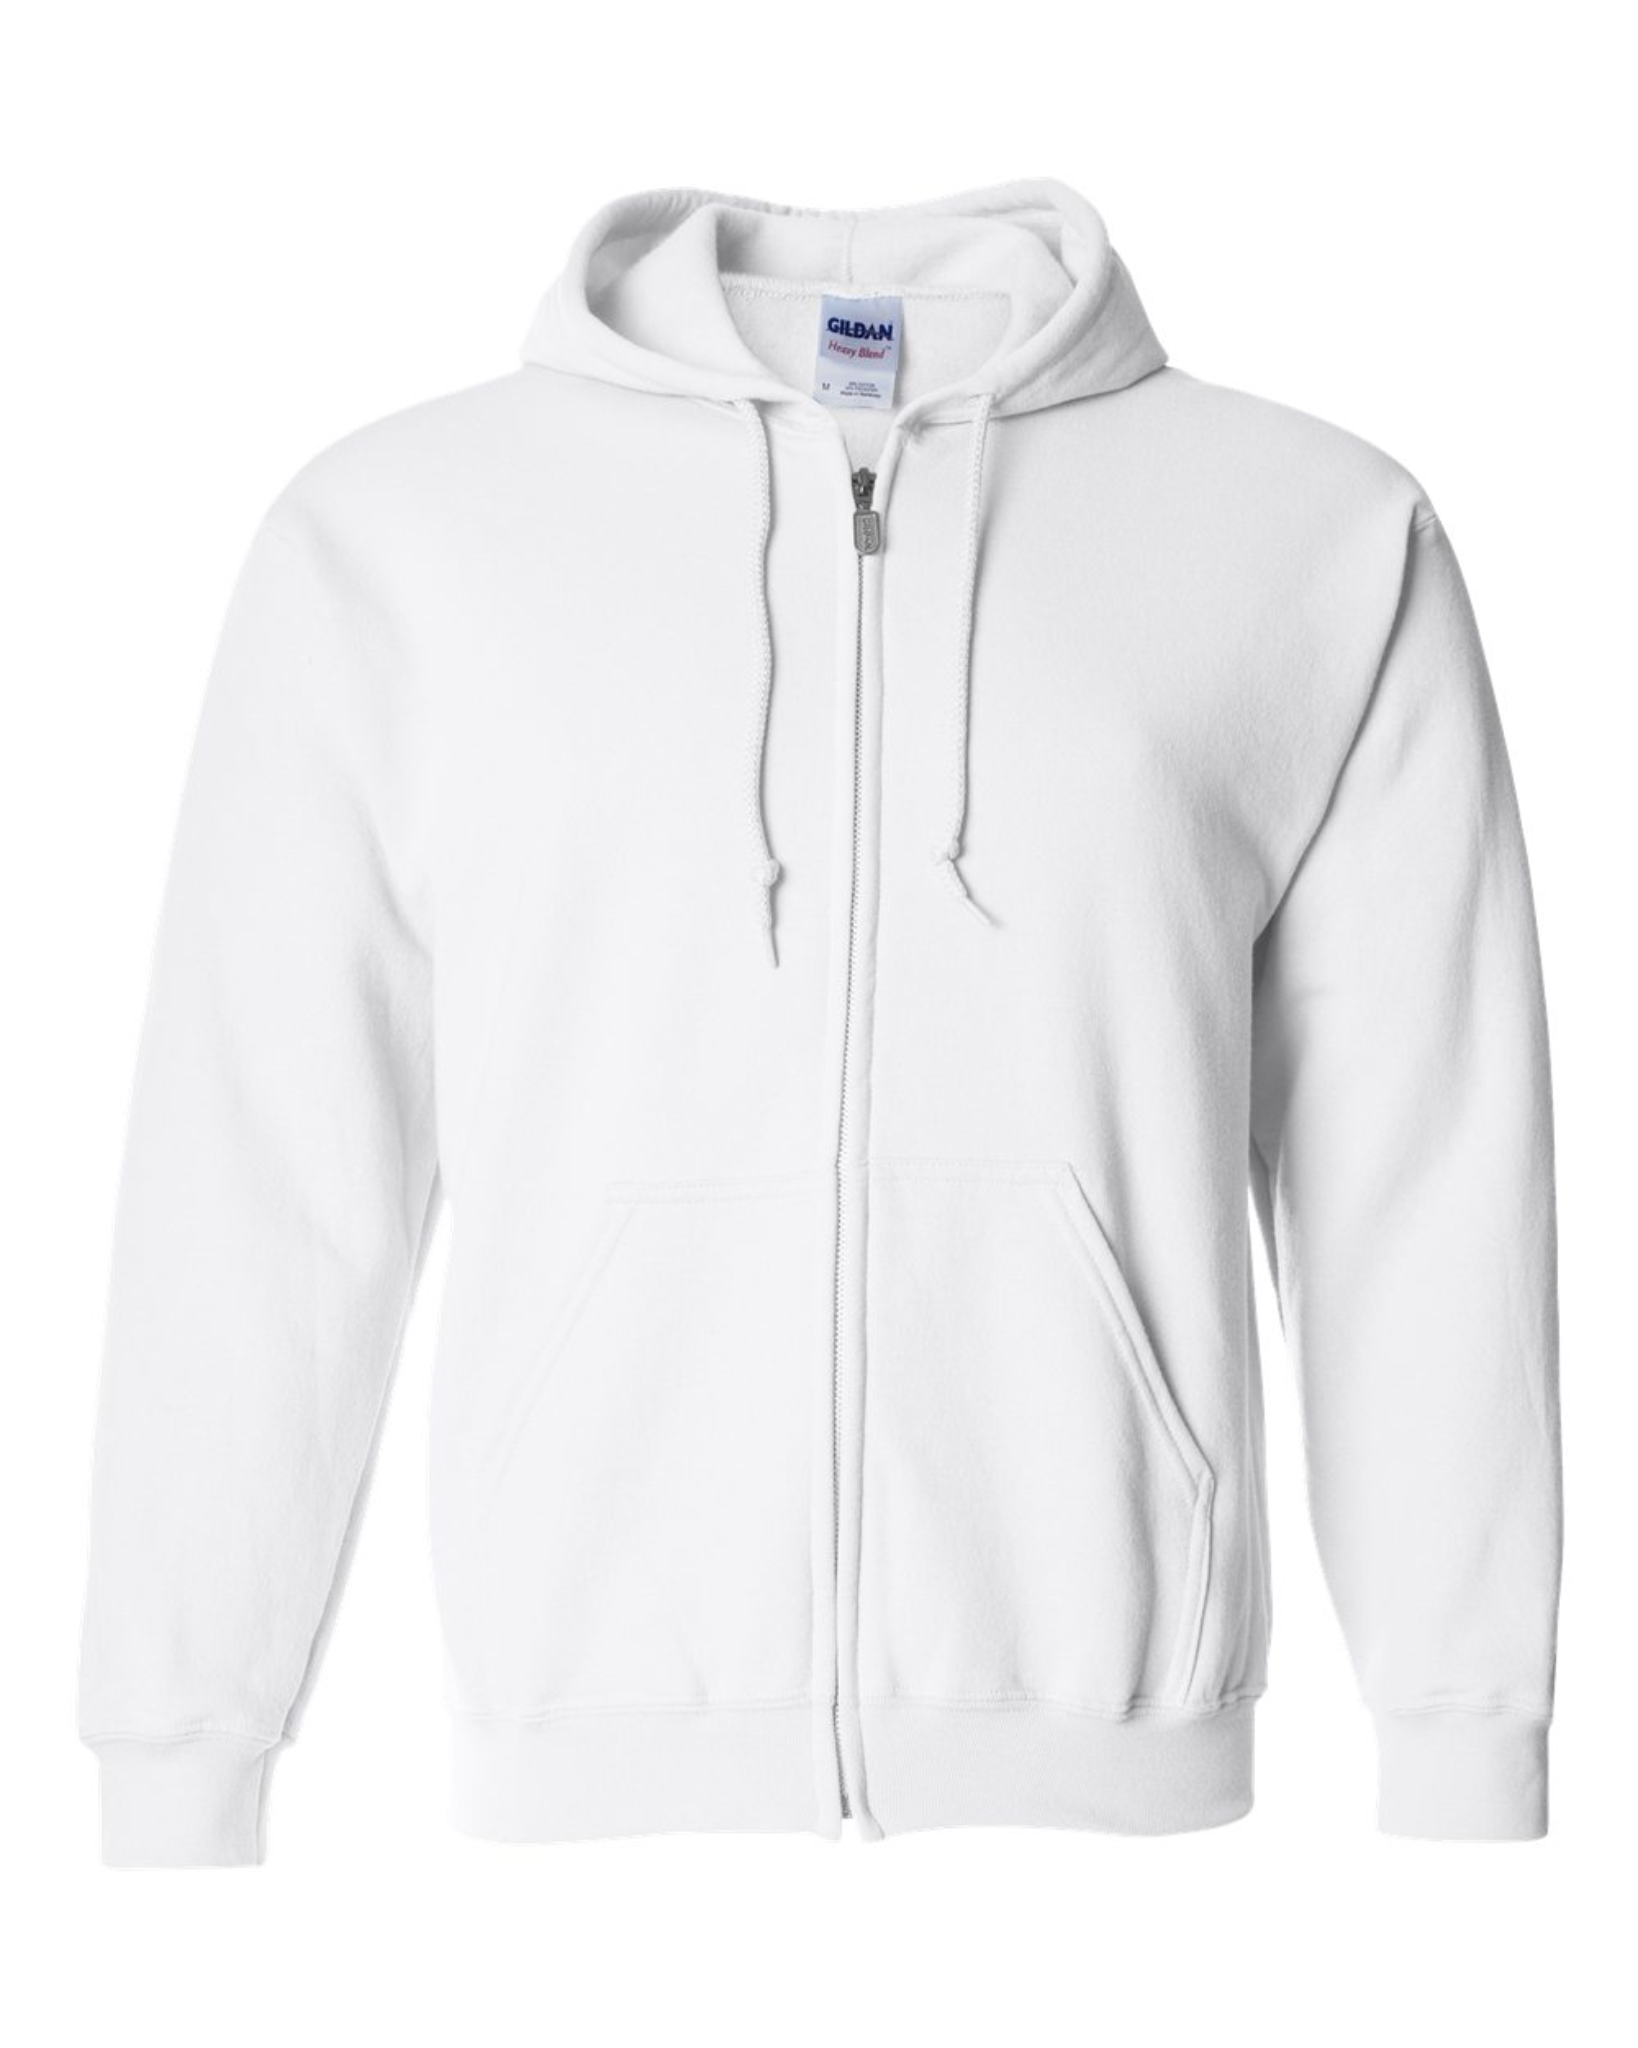 White Adult Full-Zip Hoodie - Cotton/Polyester - Gildan 18600